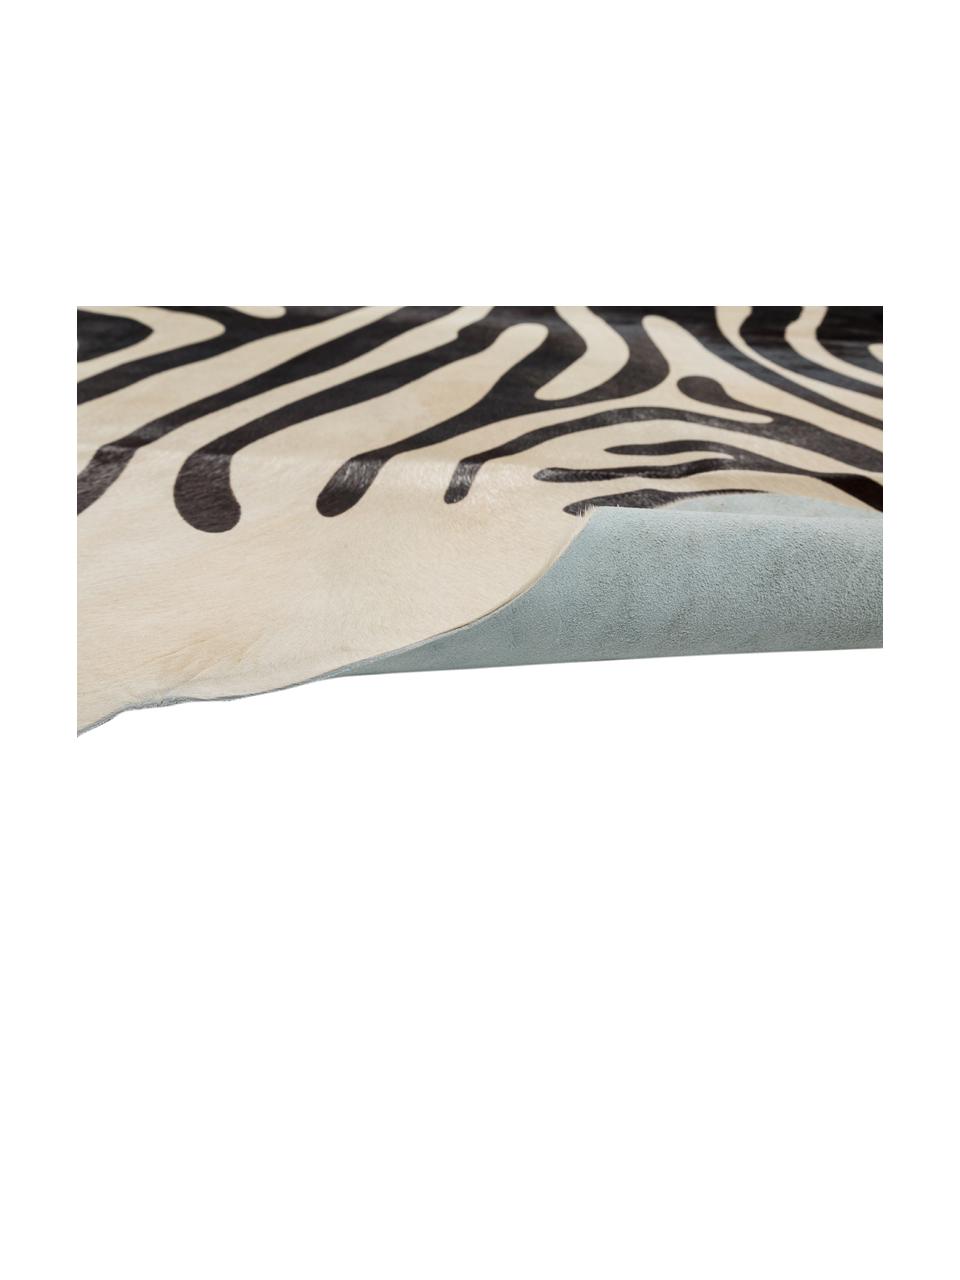 Tappeto in pelle di mucca Zebra, Pelle di mucca, stampata, Bianco, nero, L 220 x P 180 cm